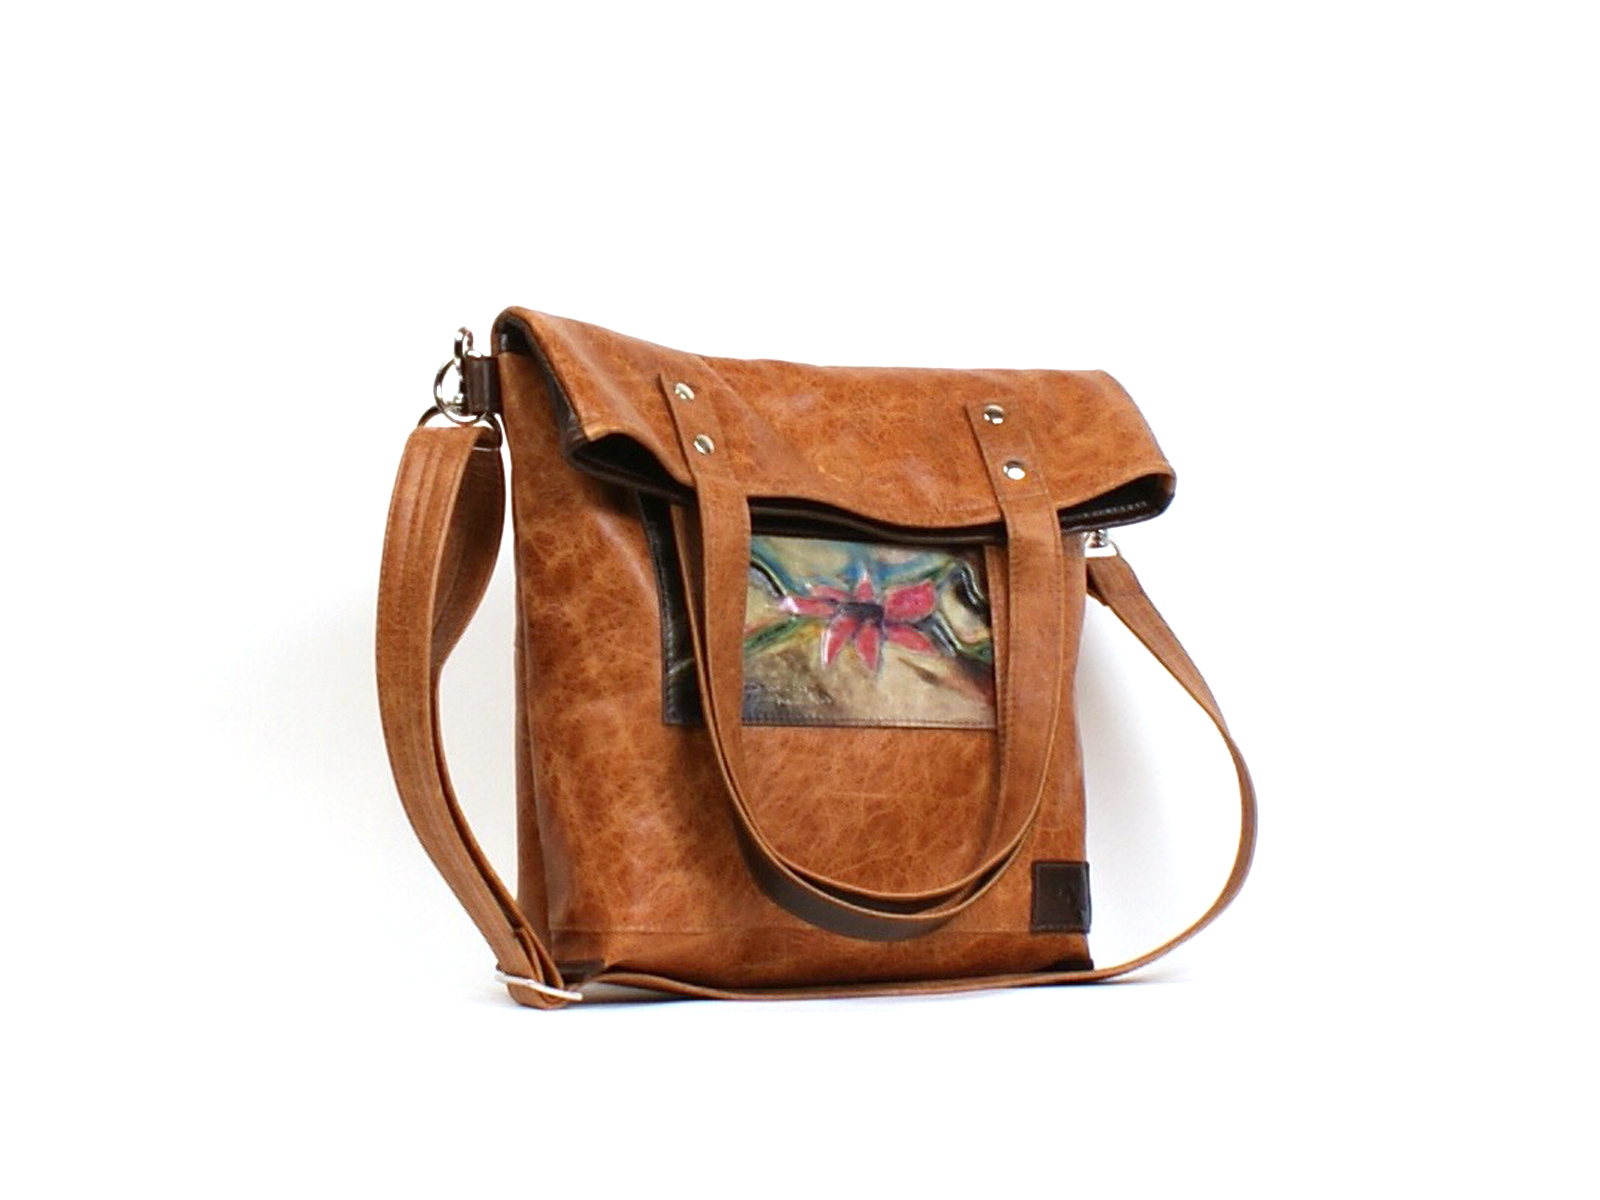 Un sac à main taupe et brun